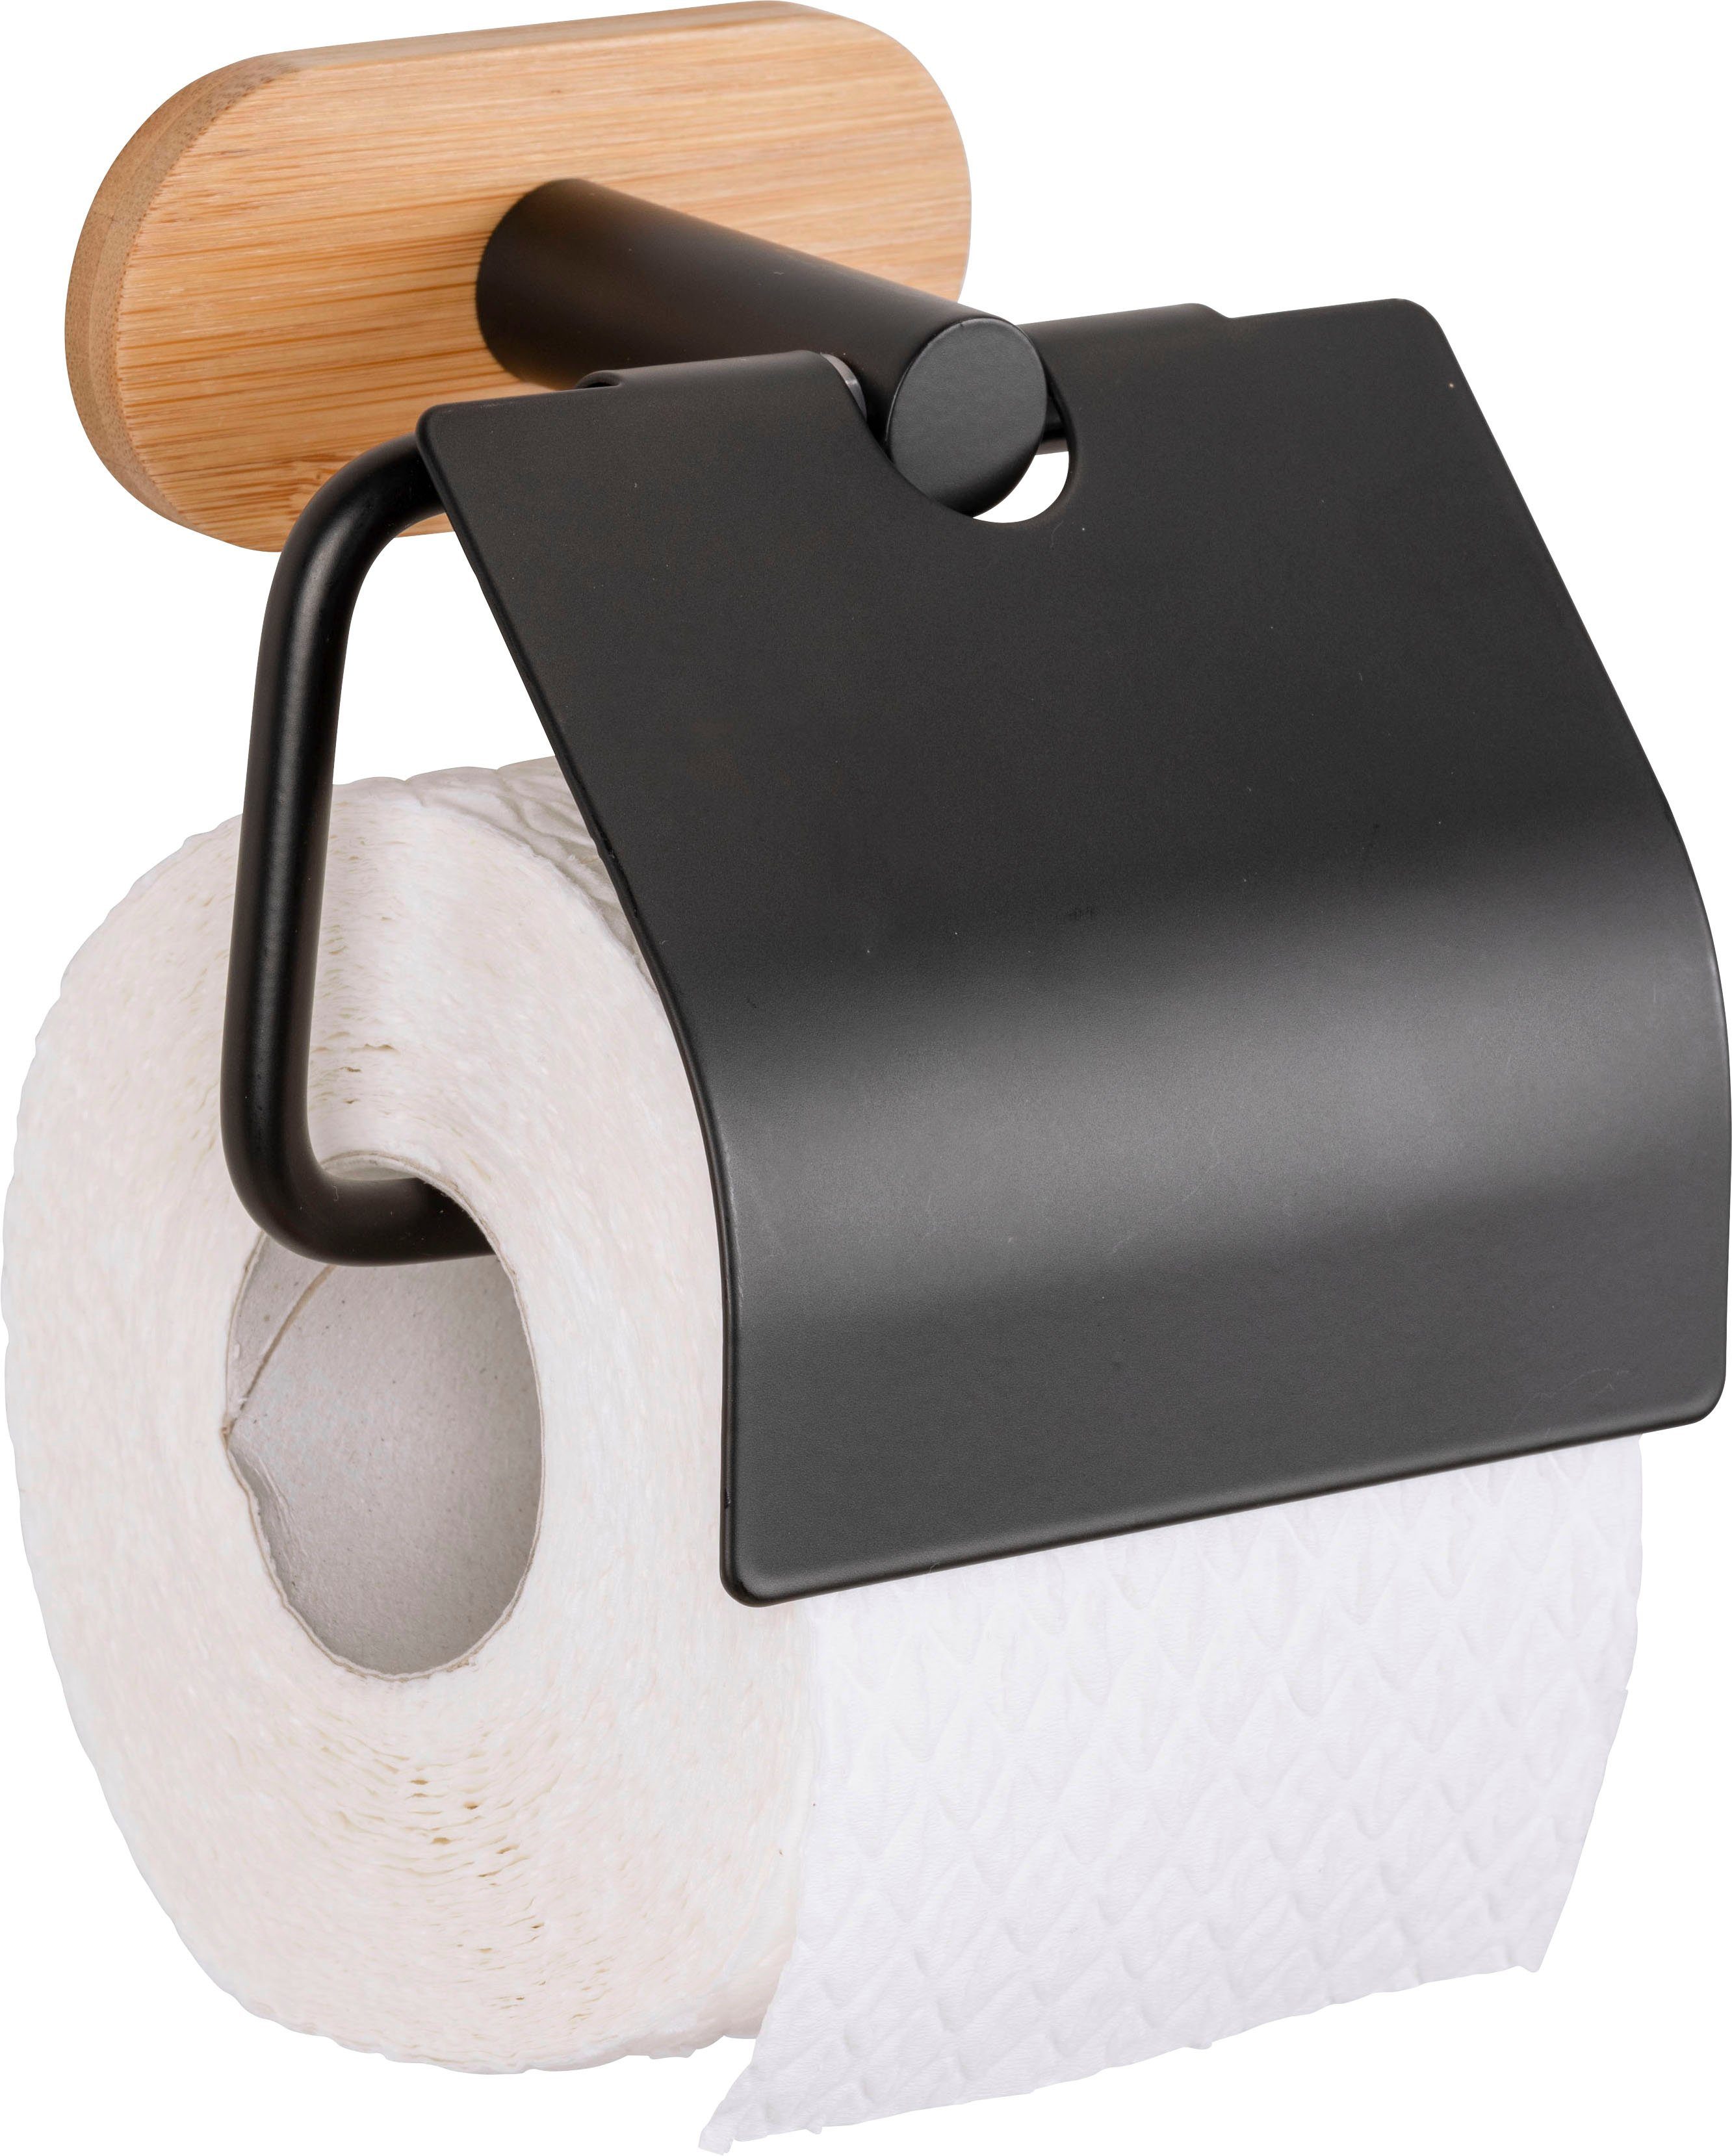 Toilettenpapierhalter ohne bohren Befestigen Turbo-Loc® Bamboo, WENKO Orea